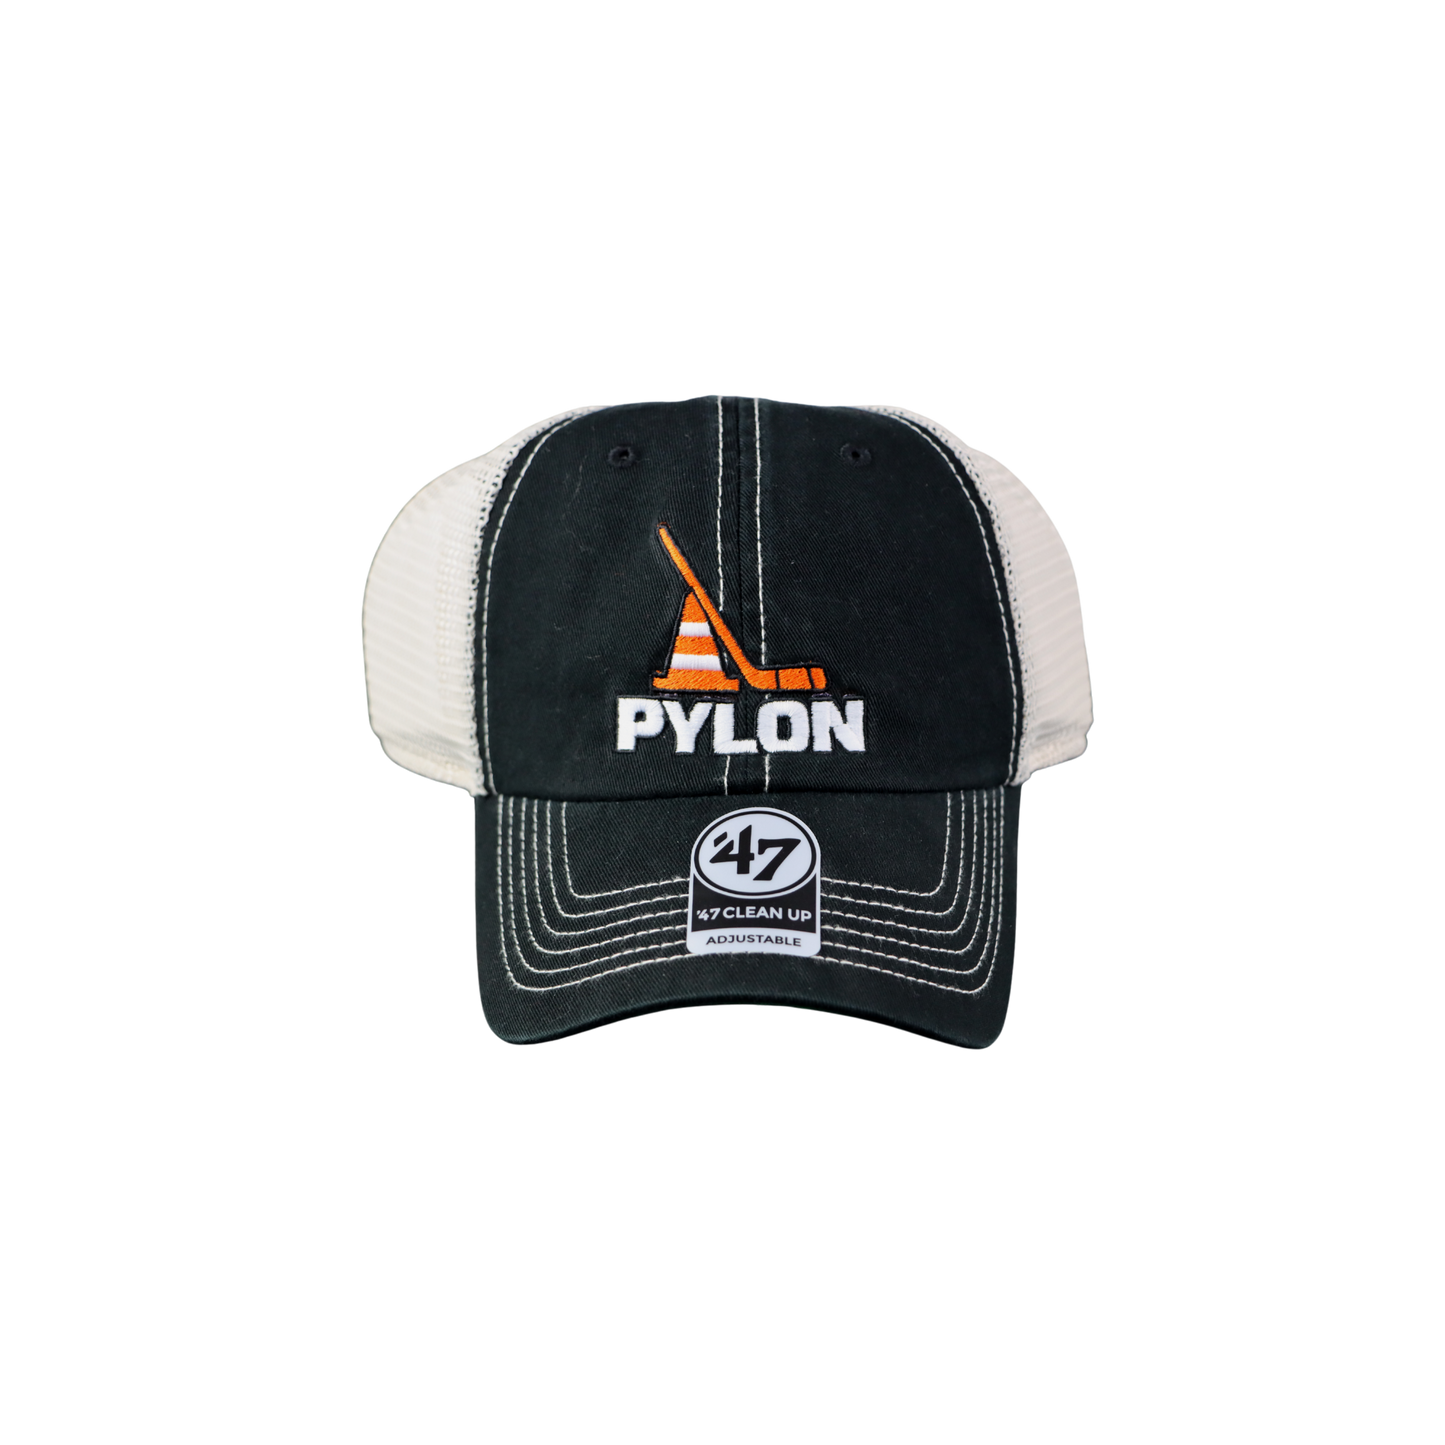 CHEL 47' Brand "Pylon" Adjustable Cap